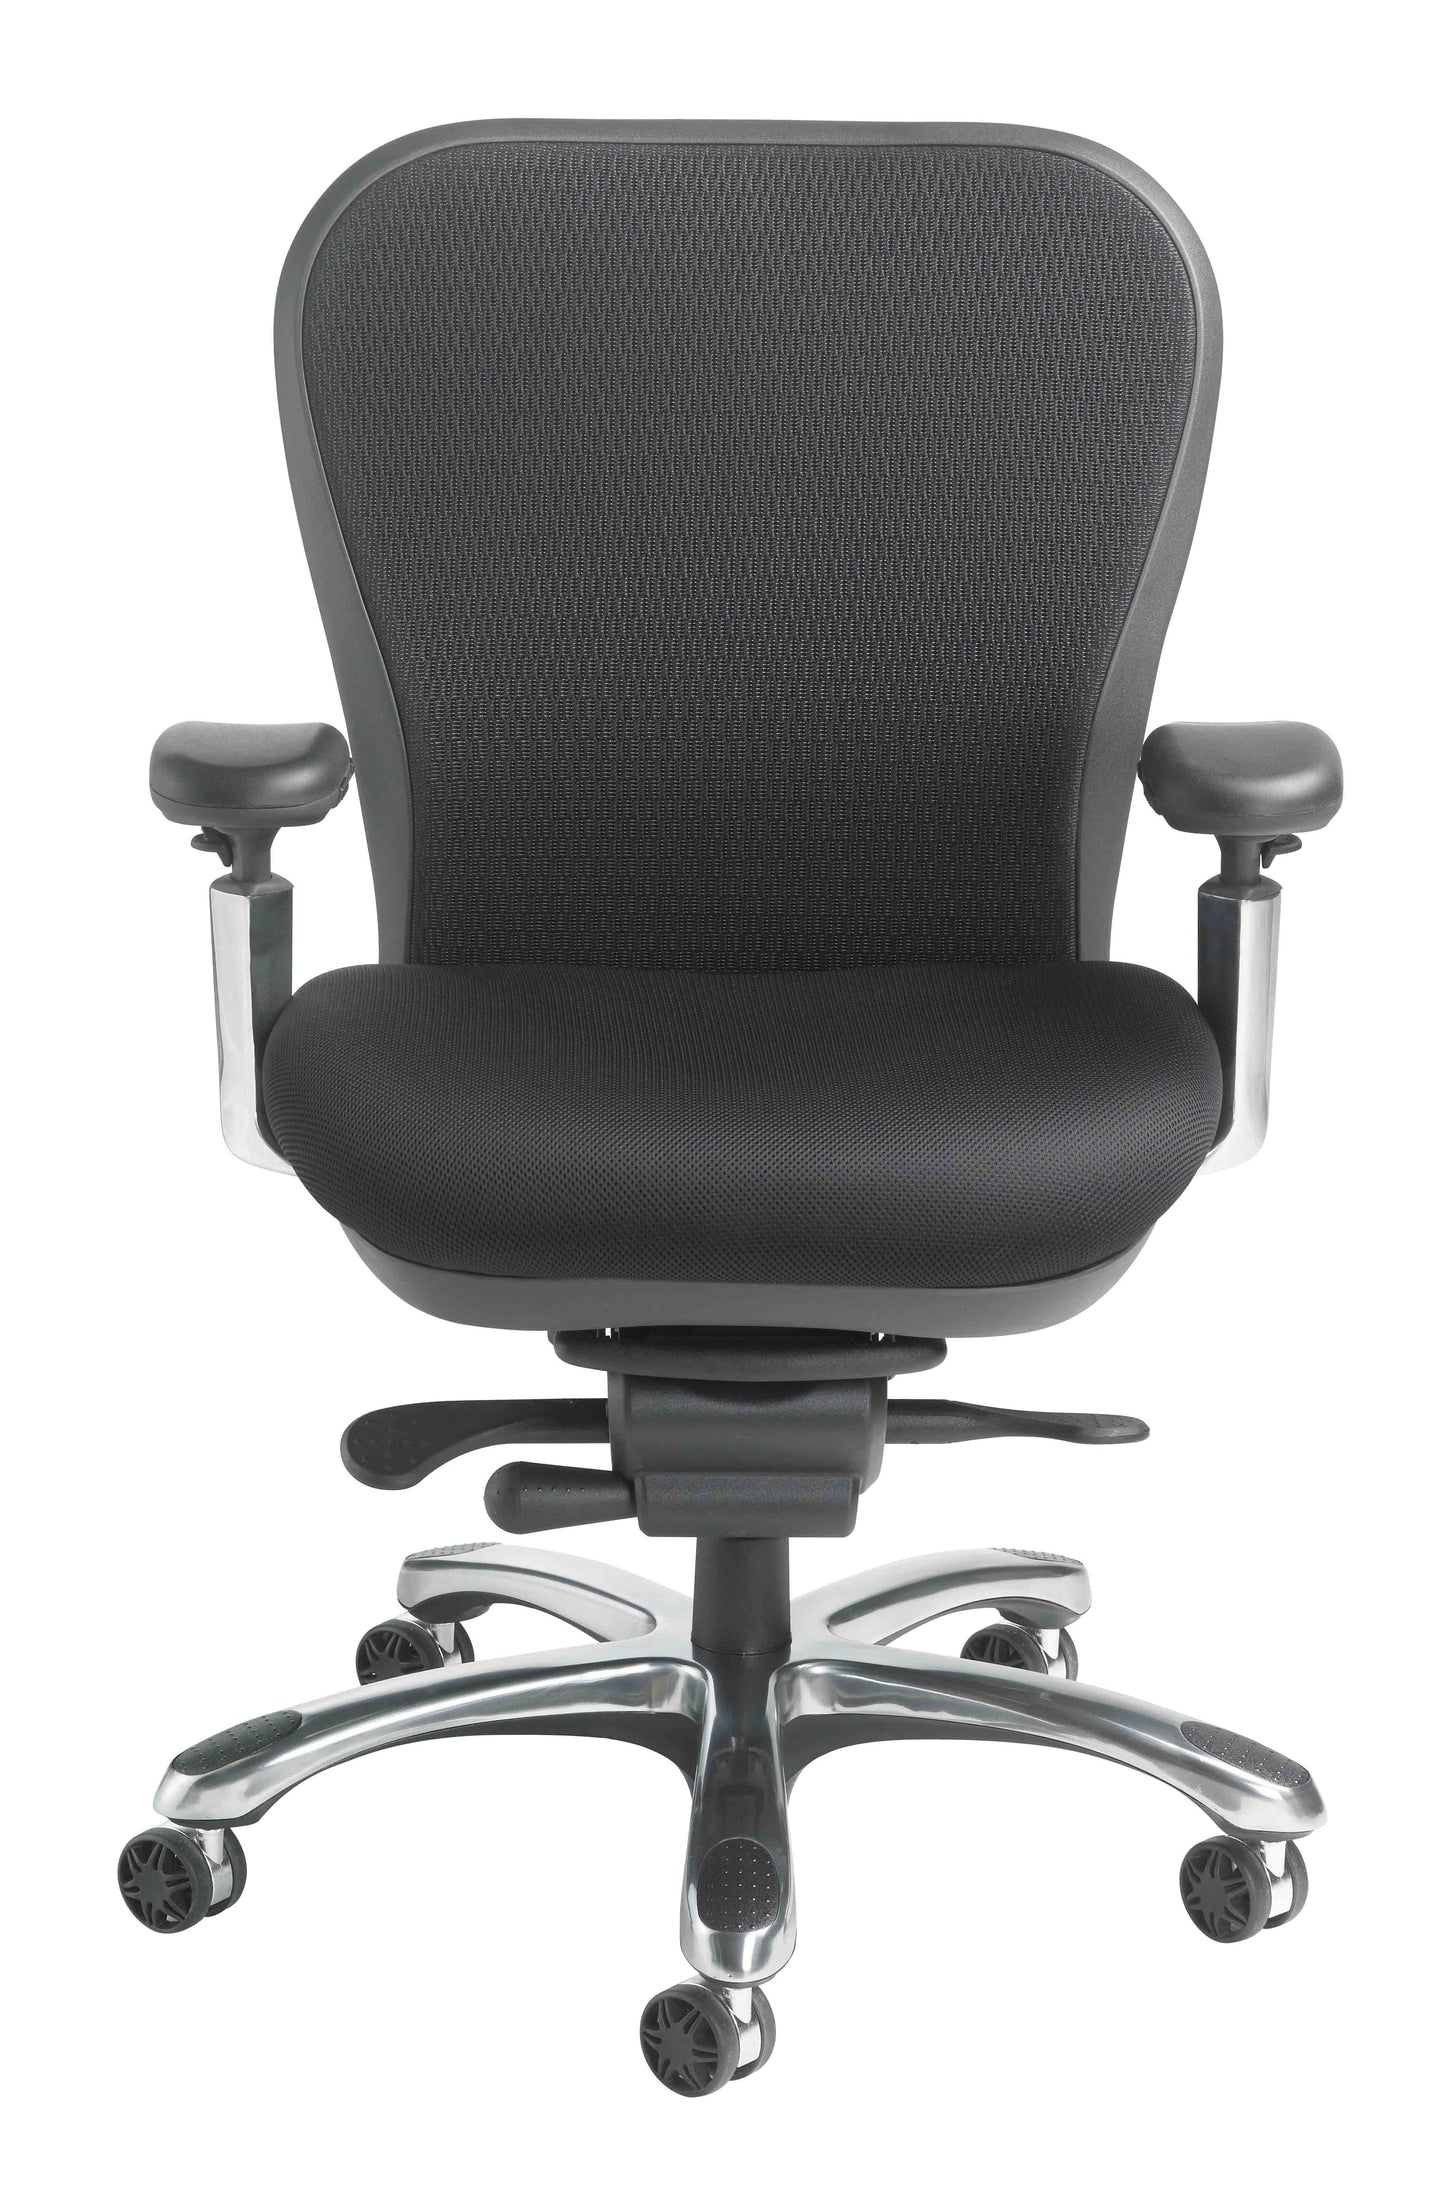 Nightingale CXO Office Chair - 6200 - Black